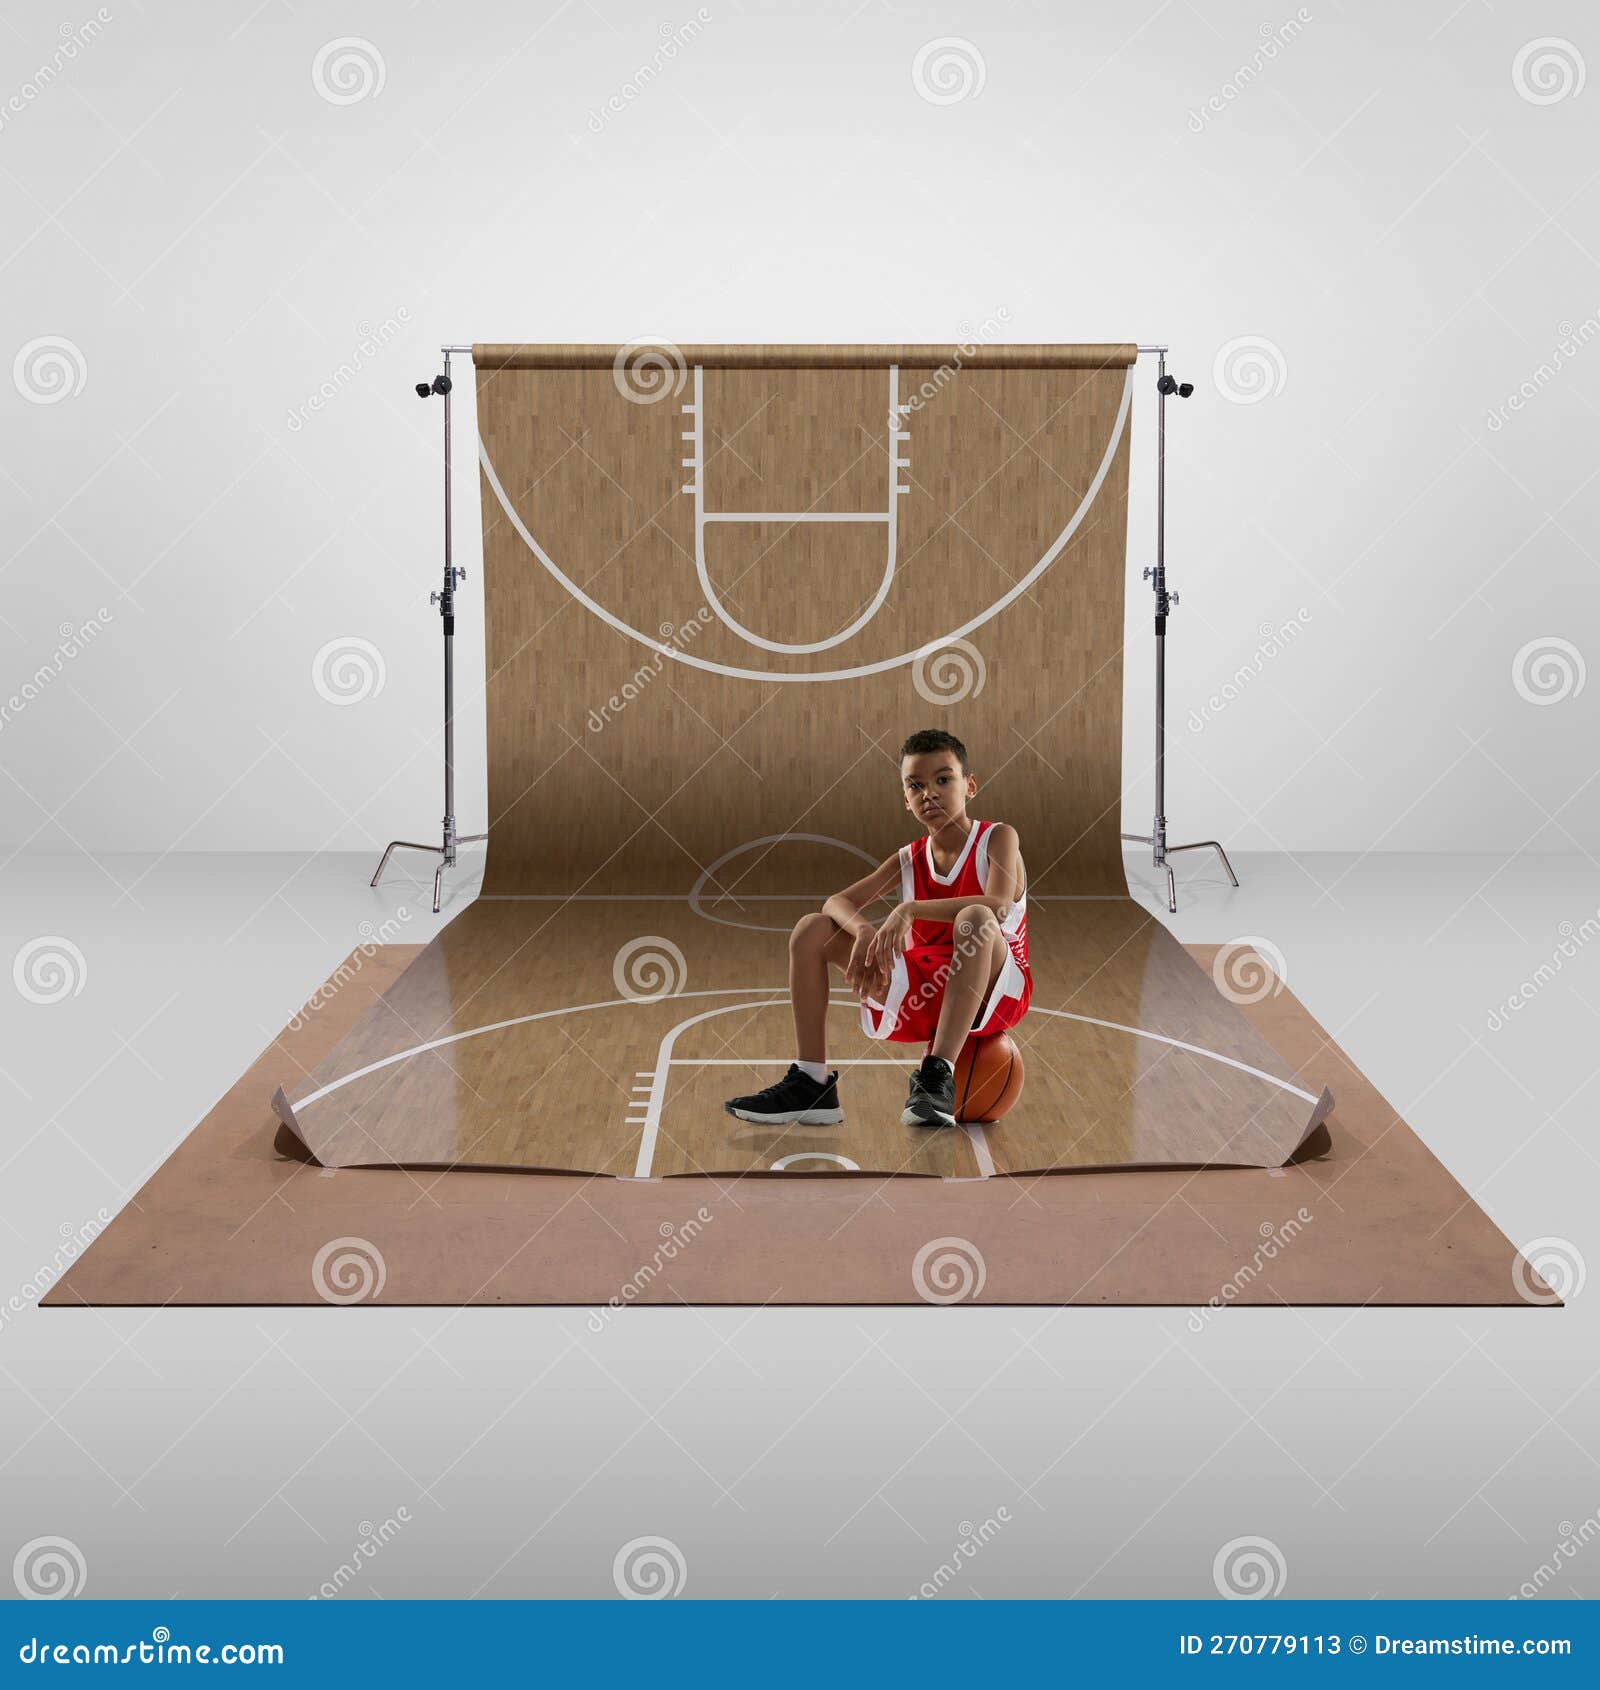 Basketball player - Playground